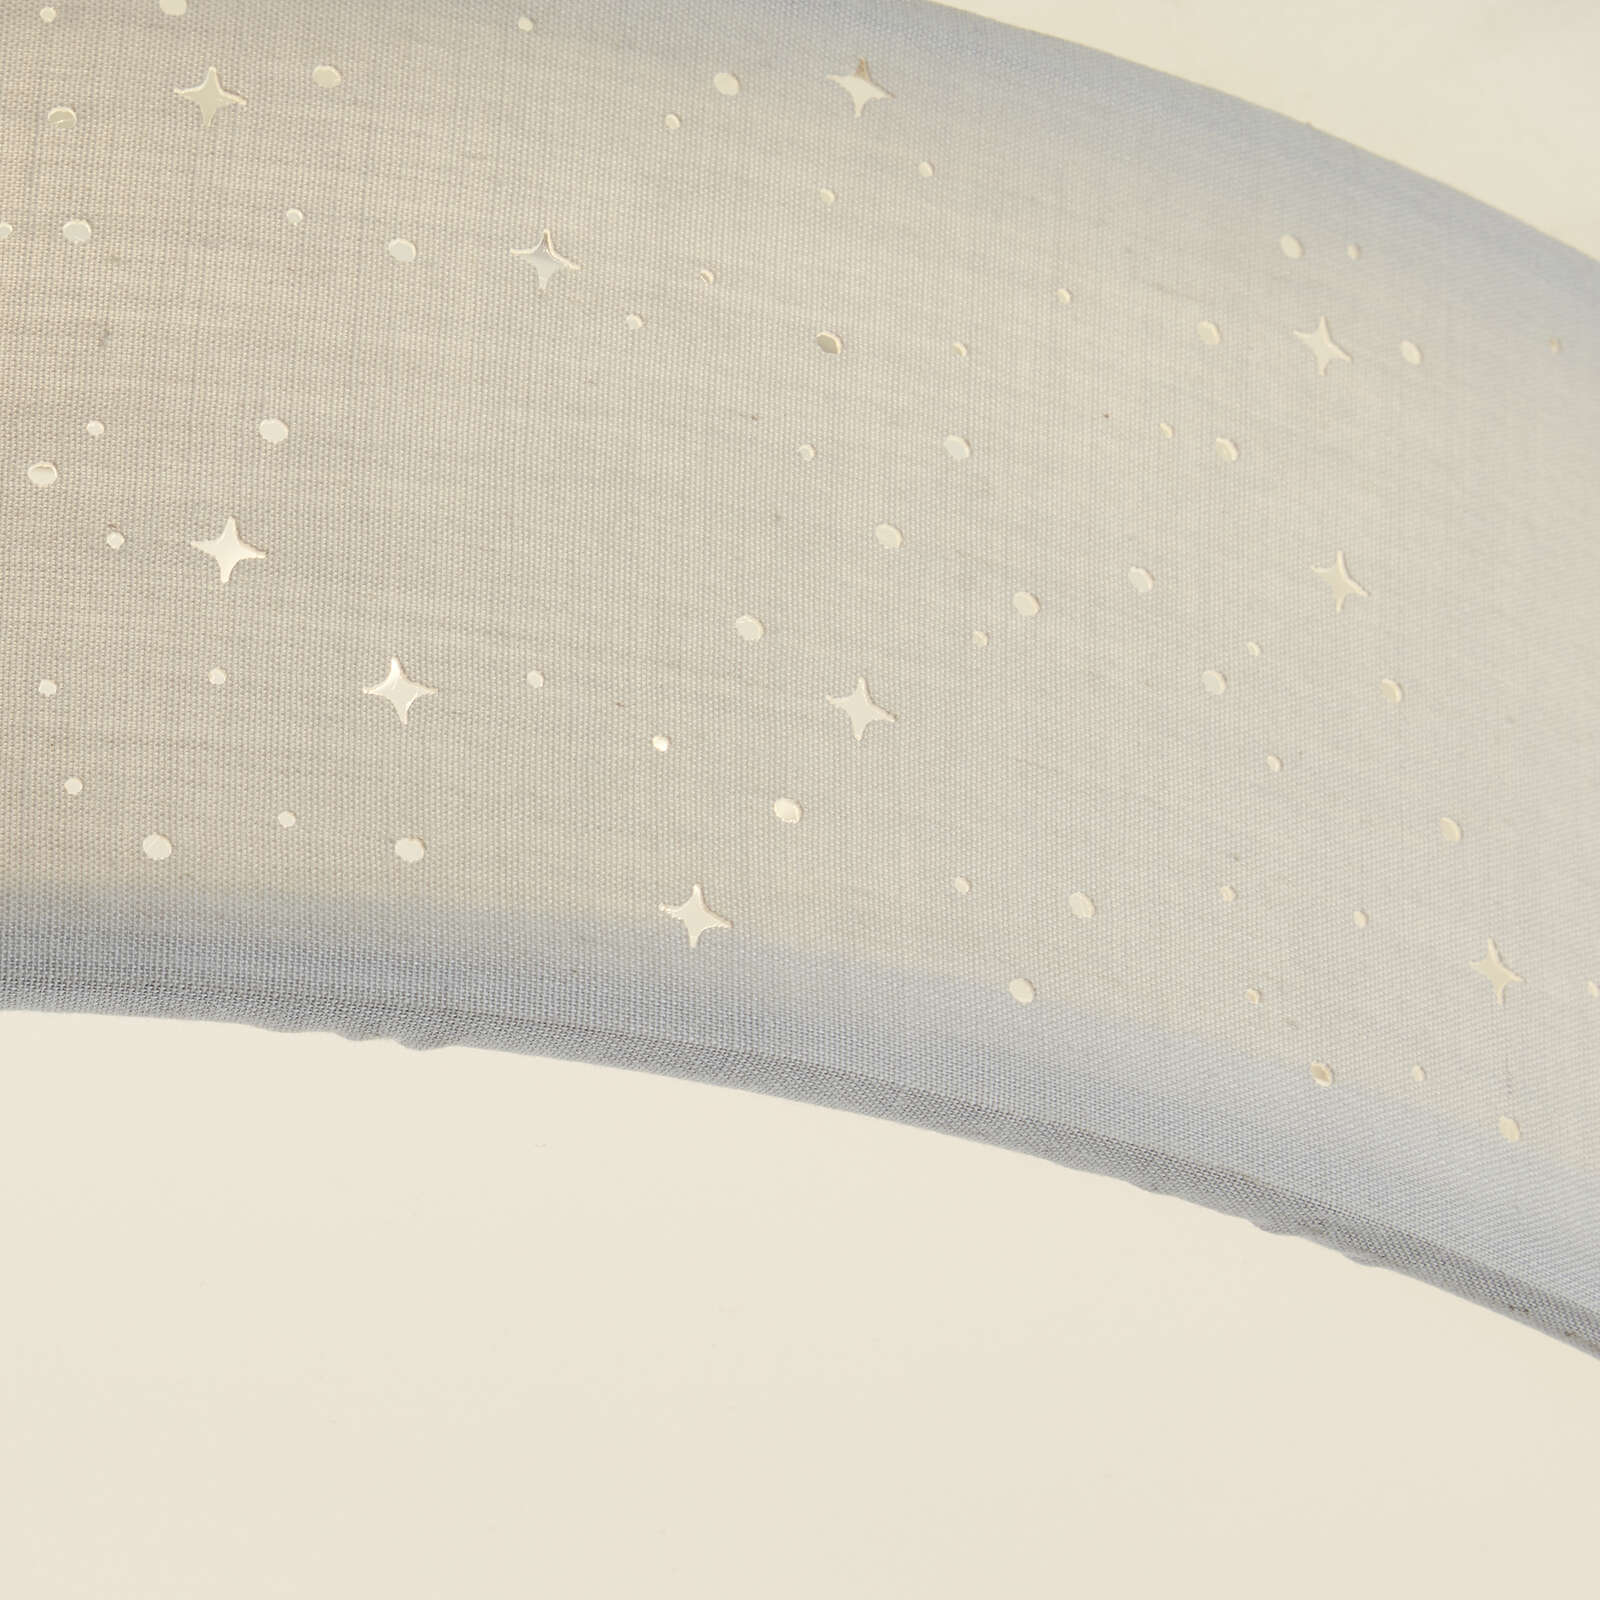             Textile ceiling light - Ava 1 - Grey
        